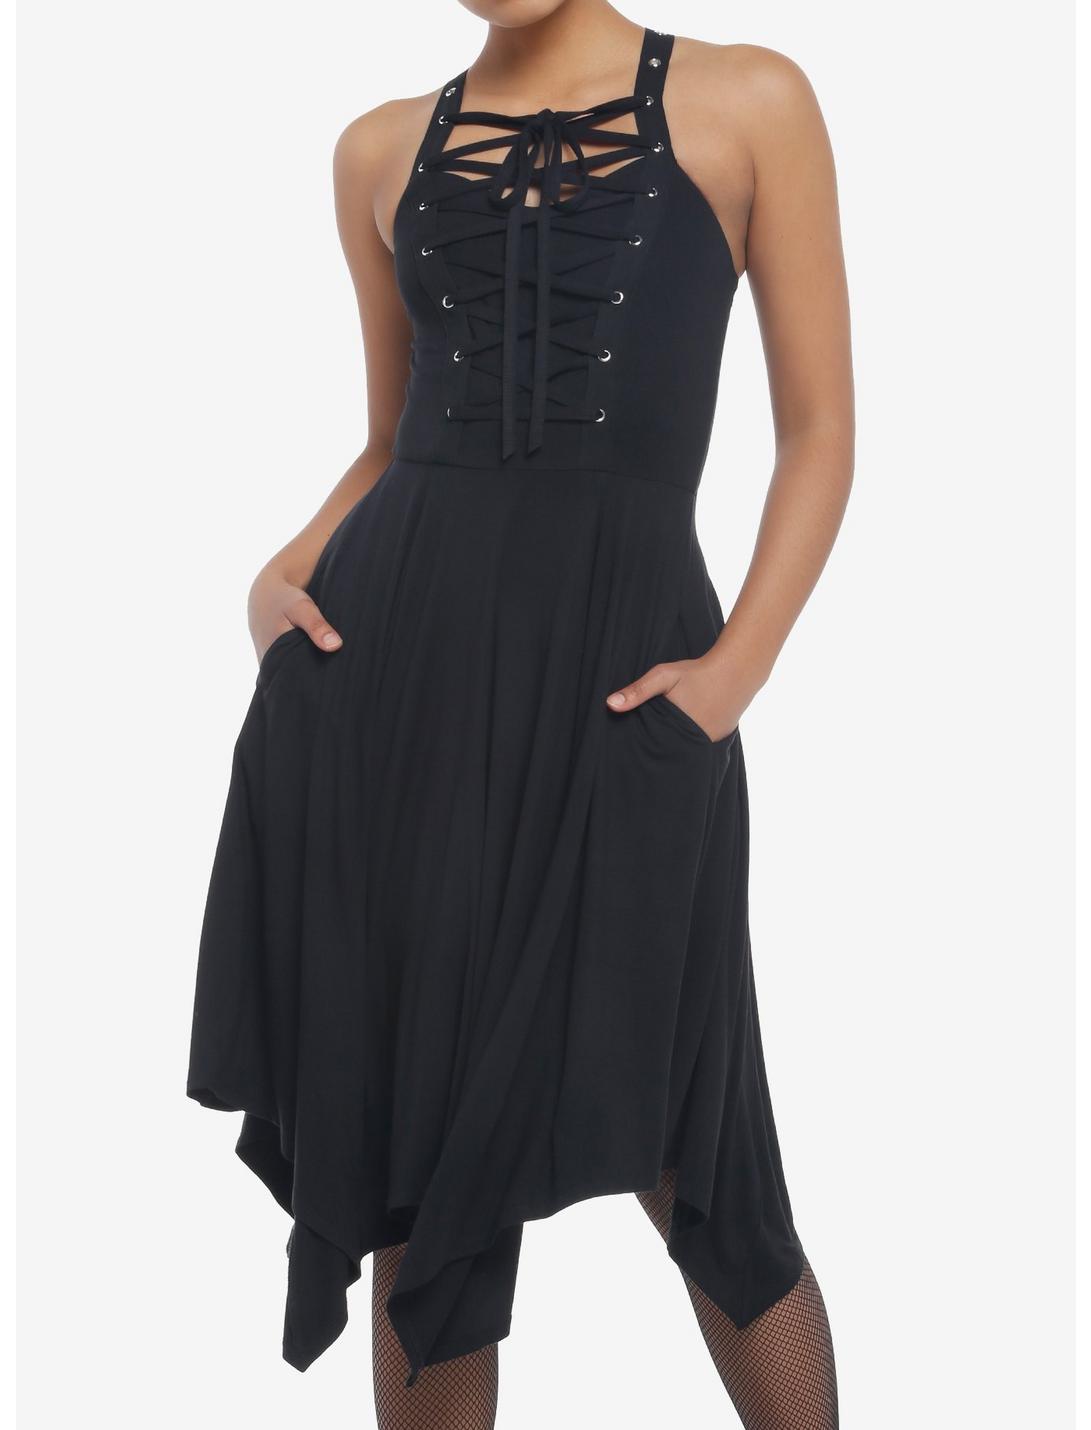 Grommet Lace-Up Hanky Hem Midi Dress, BLACK, hi-res